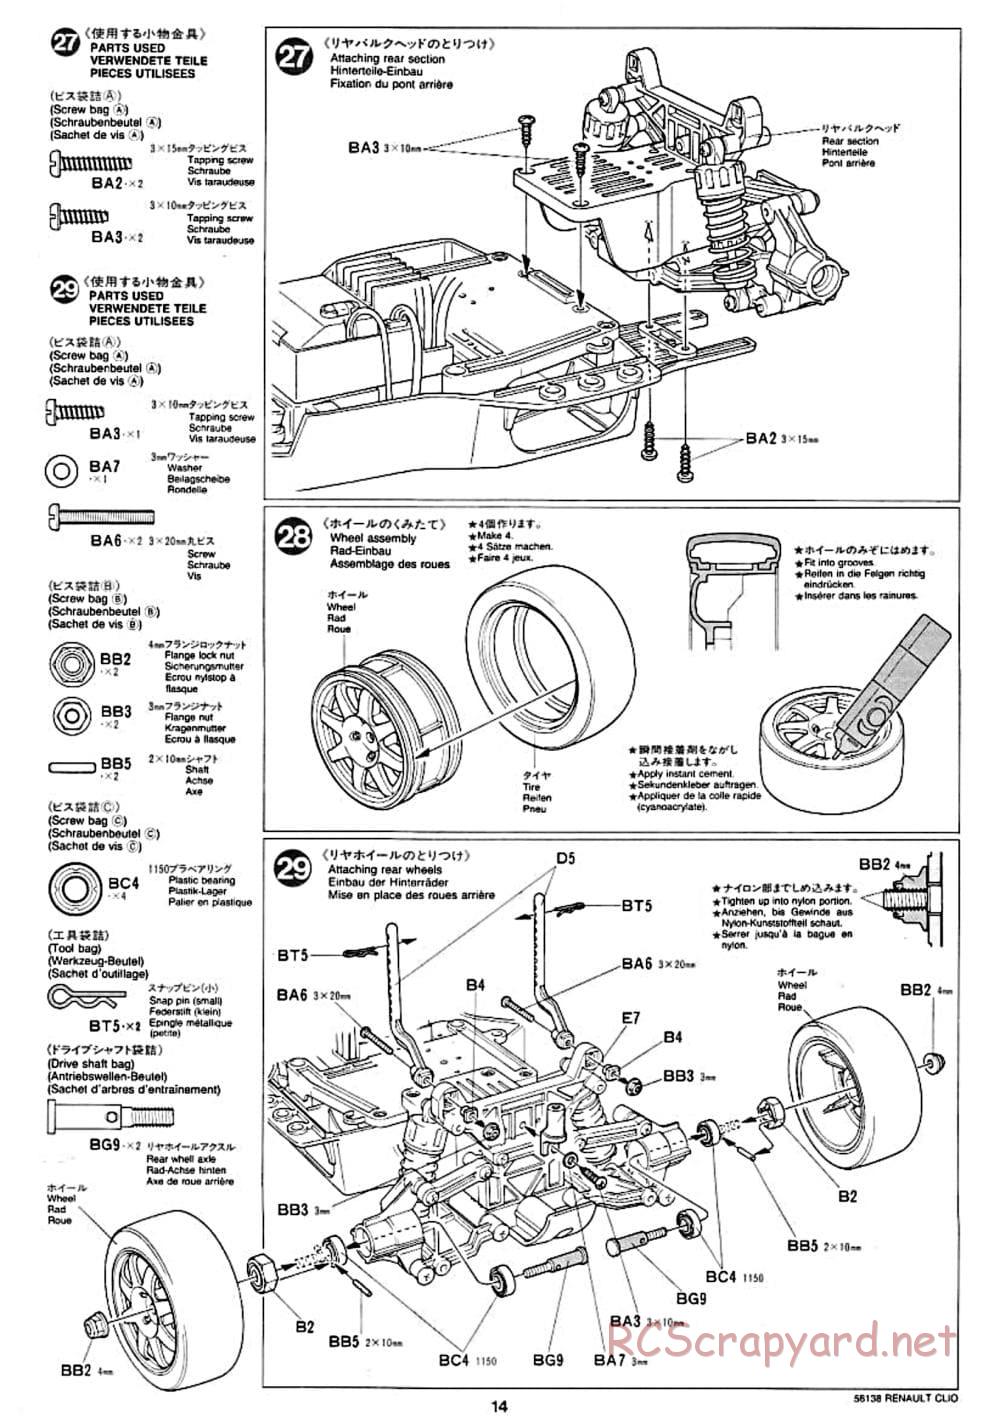 Tamiya - Renault Clio Williams Chassis - Manual - Page 14